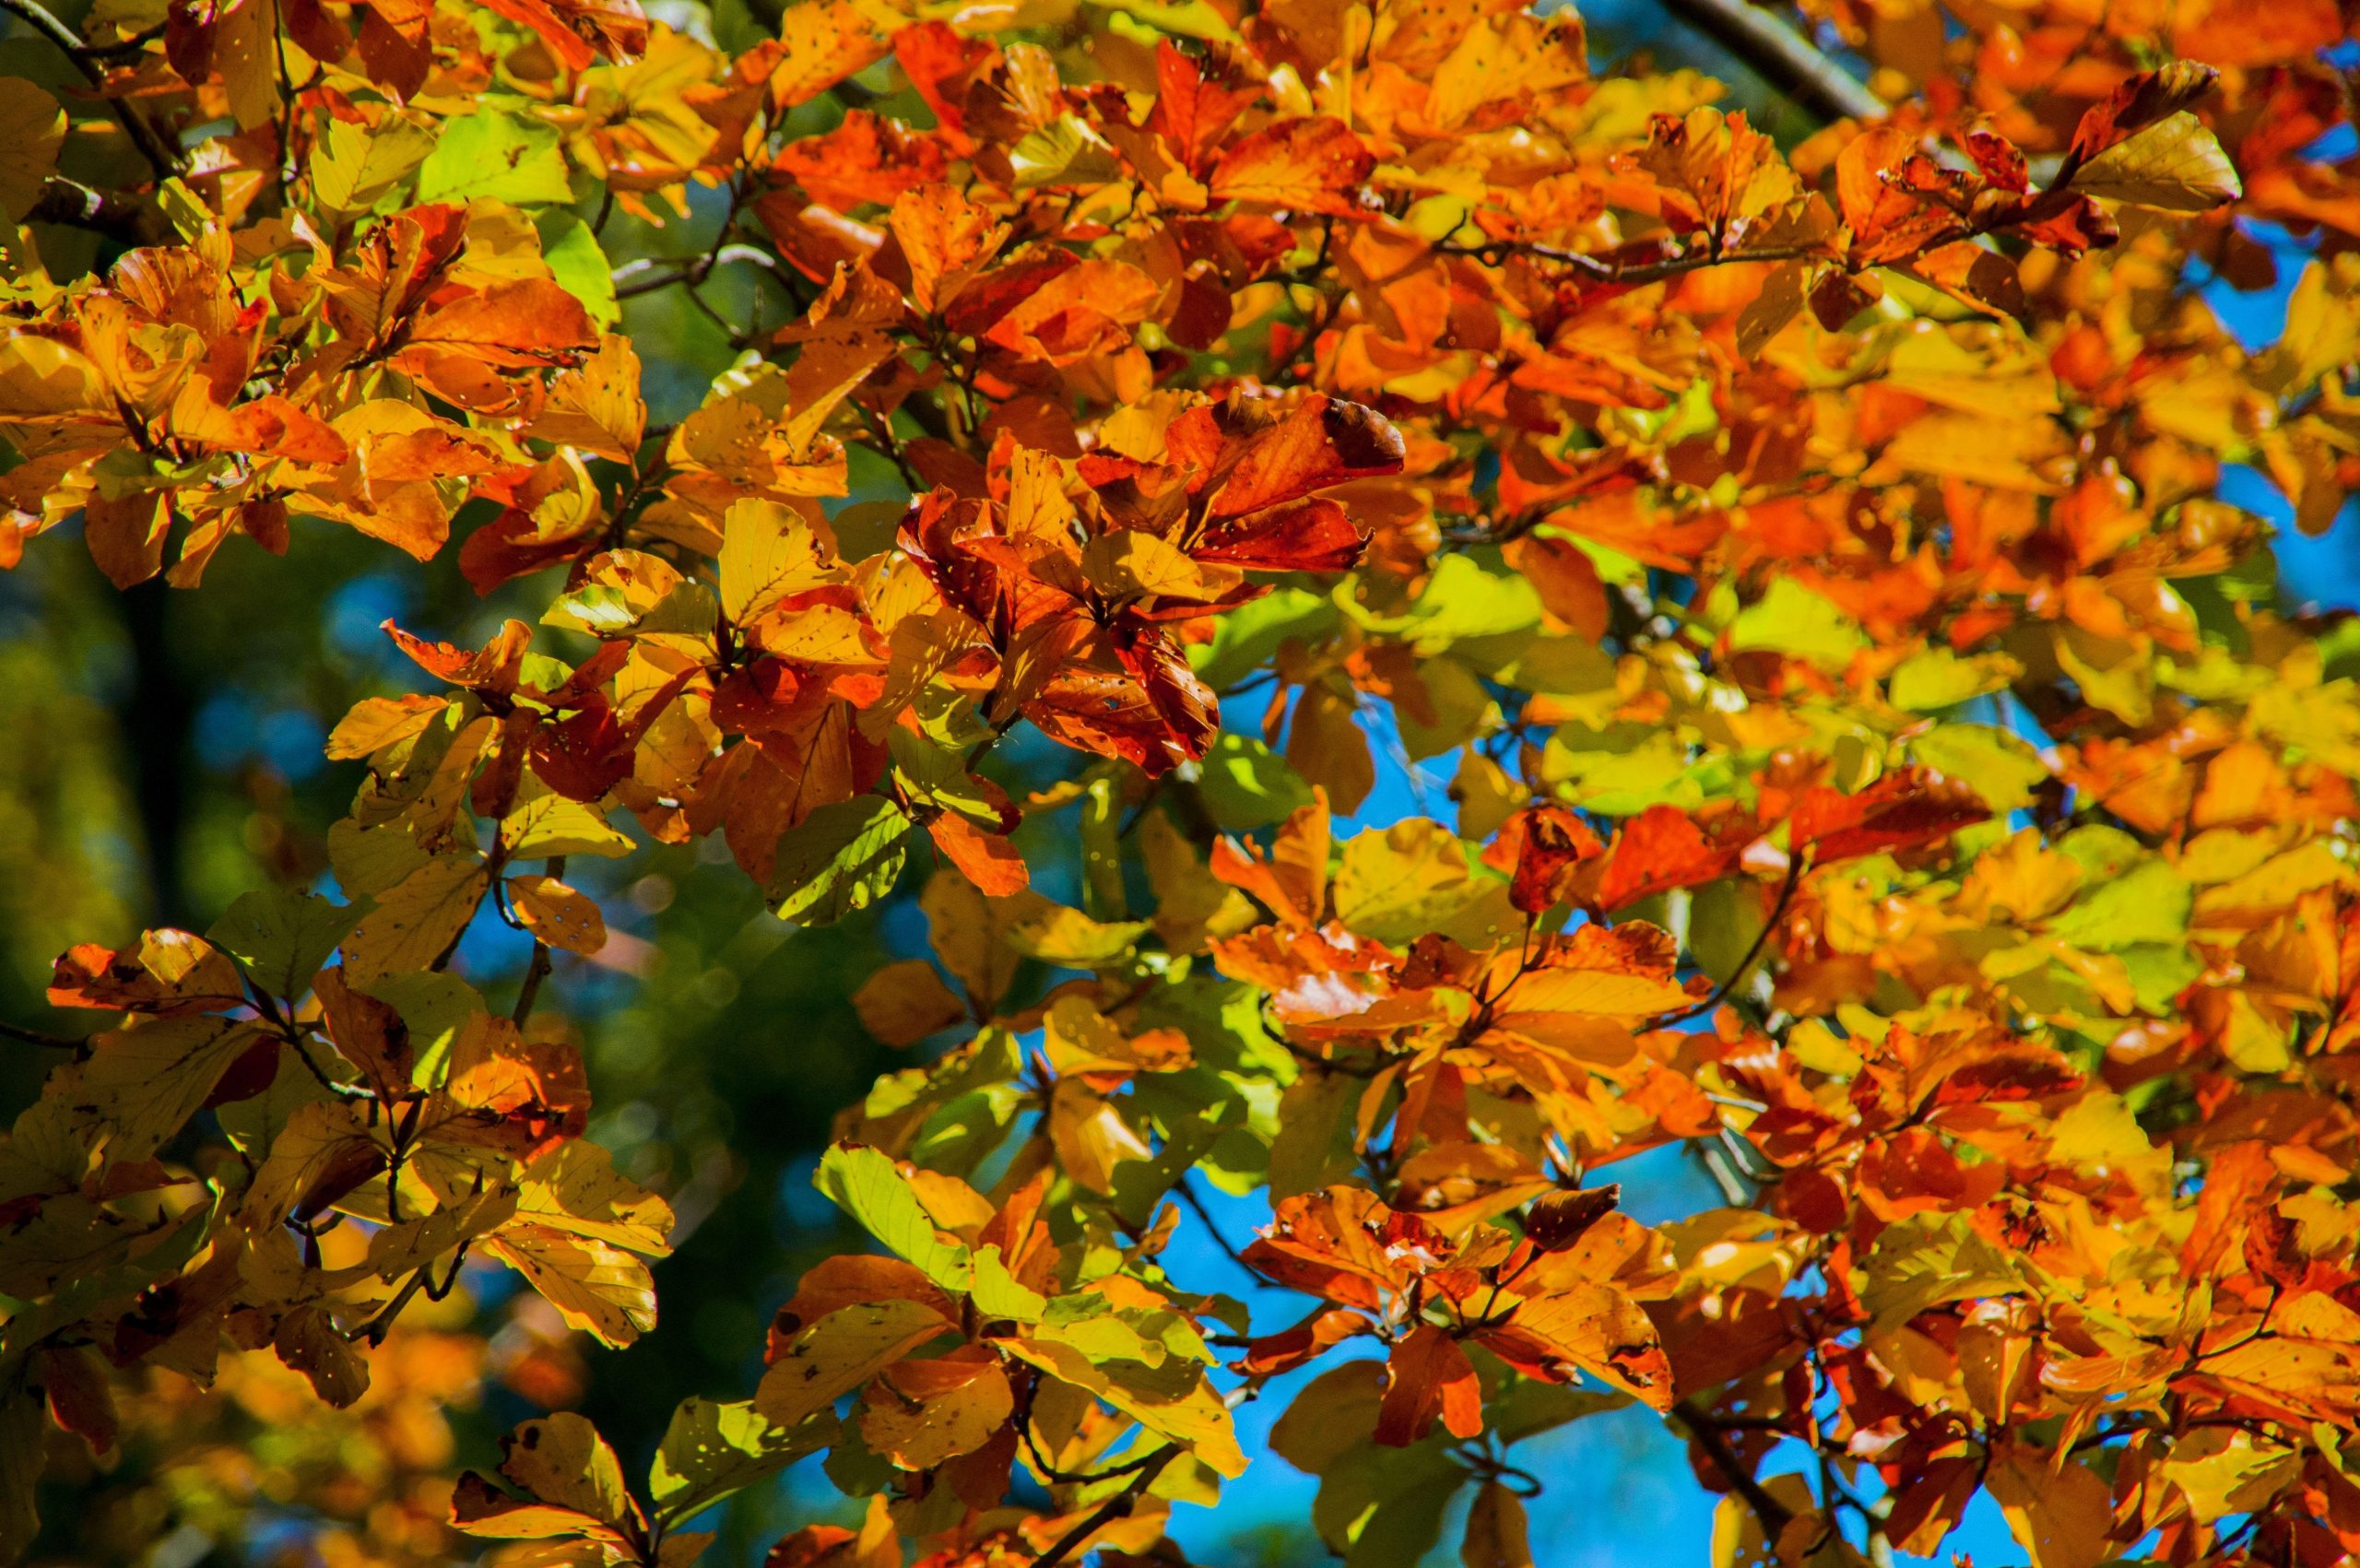 Wallpaper ID 287771  road forest season autumn fall landscape nature 4k  wallpaper free download